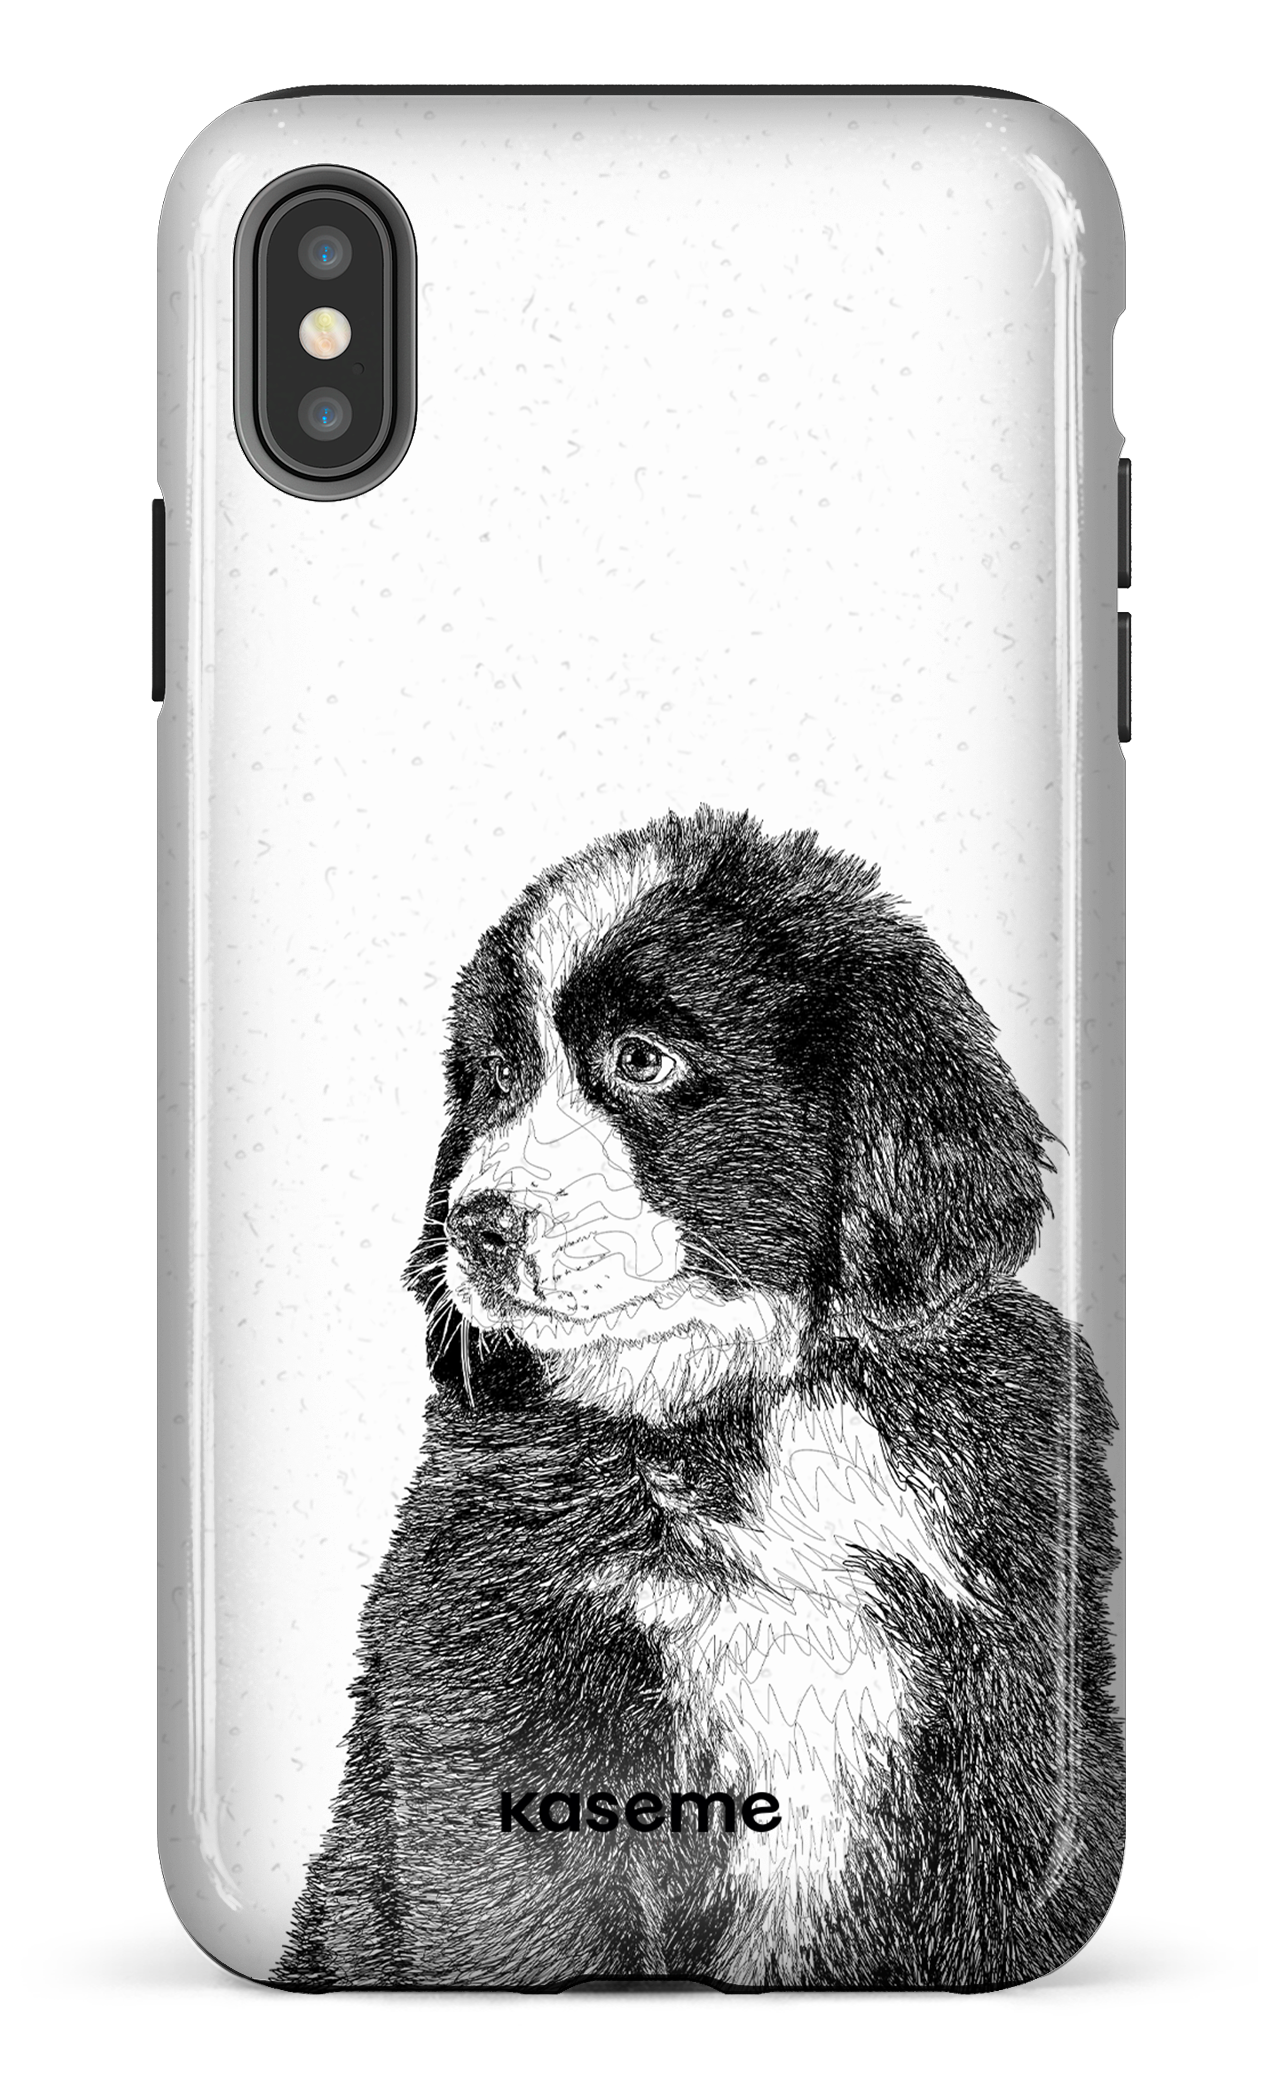 Bernese Mountain Dog - iPhone XS Max